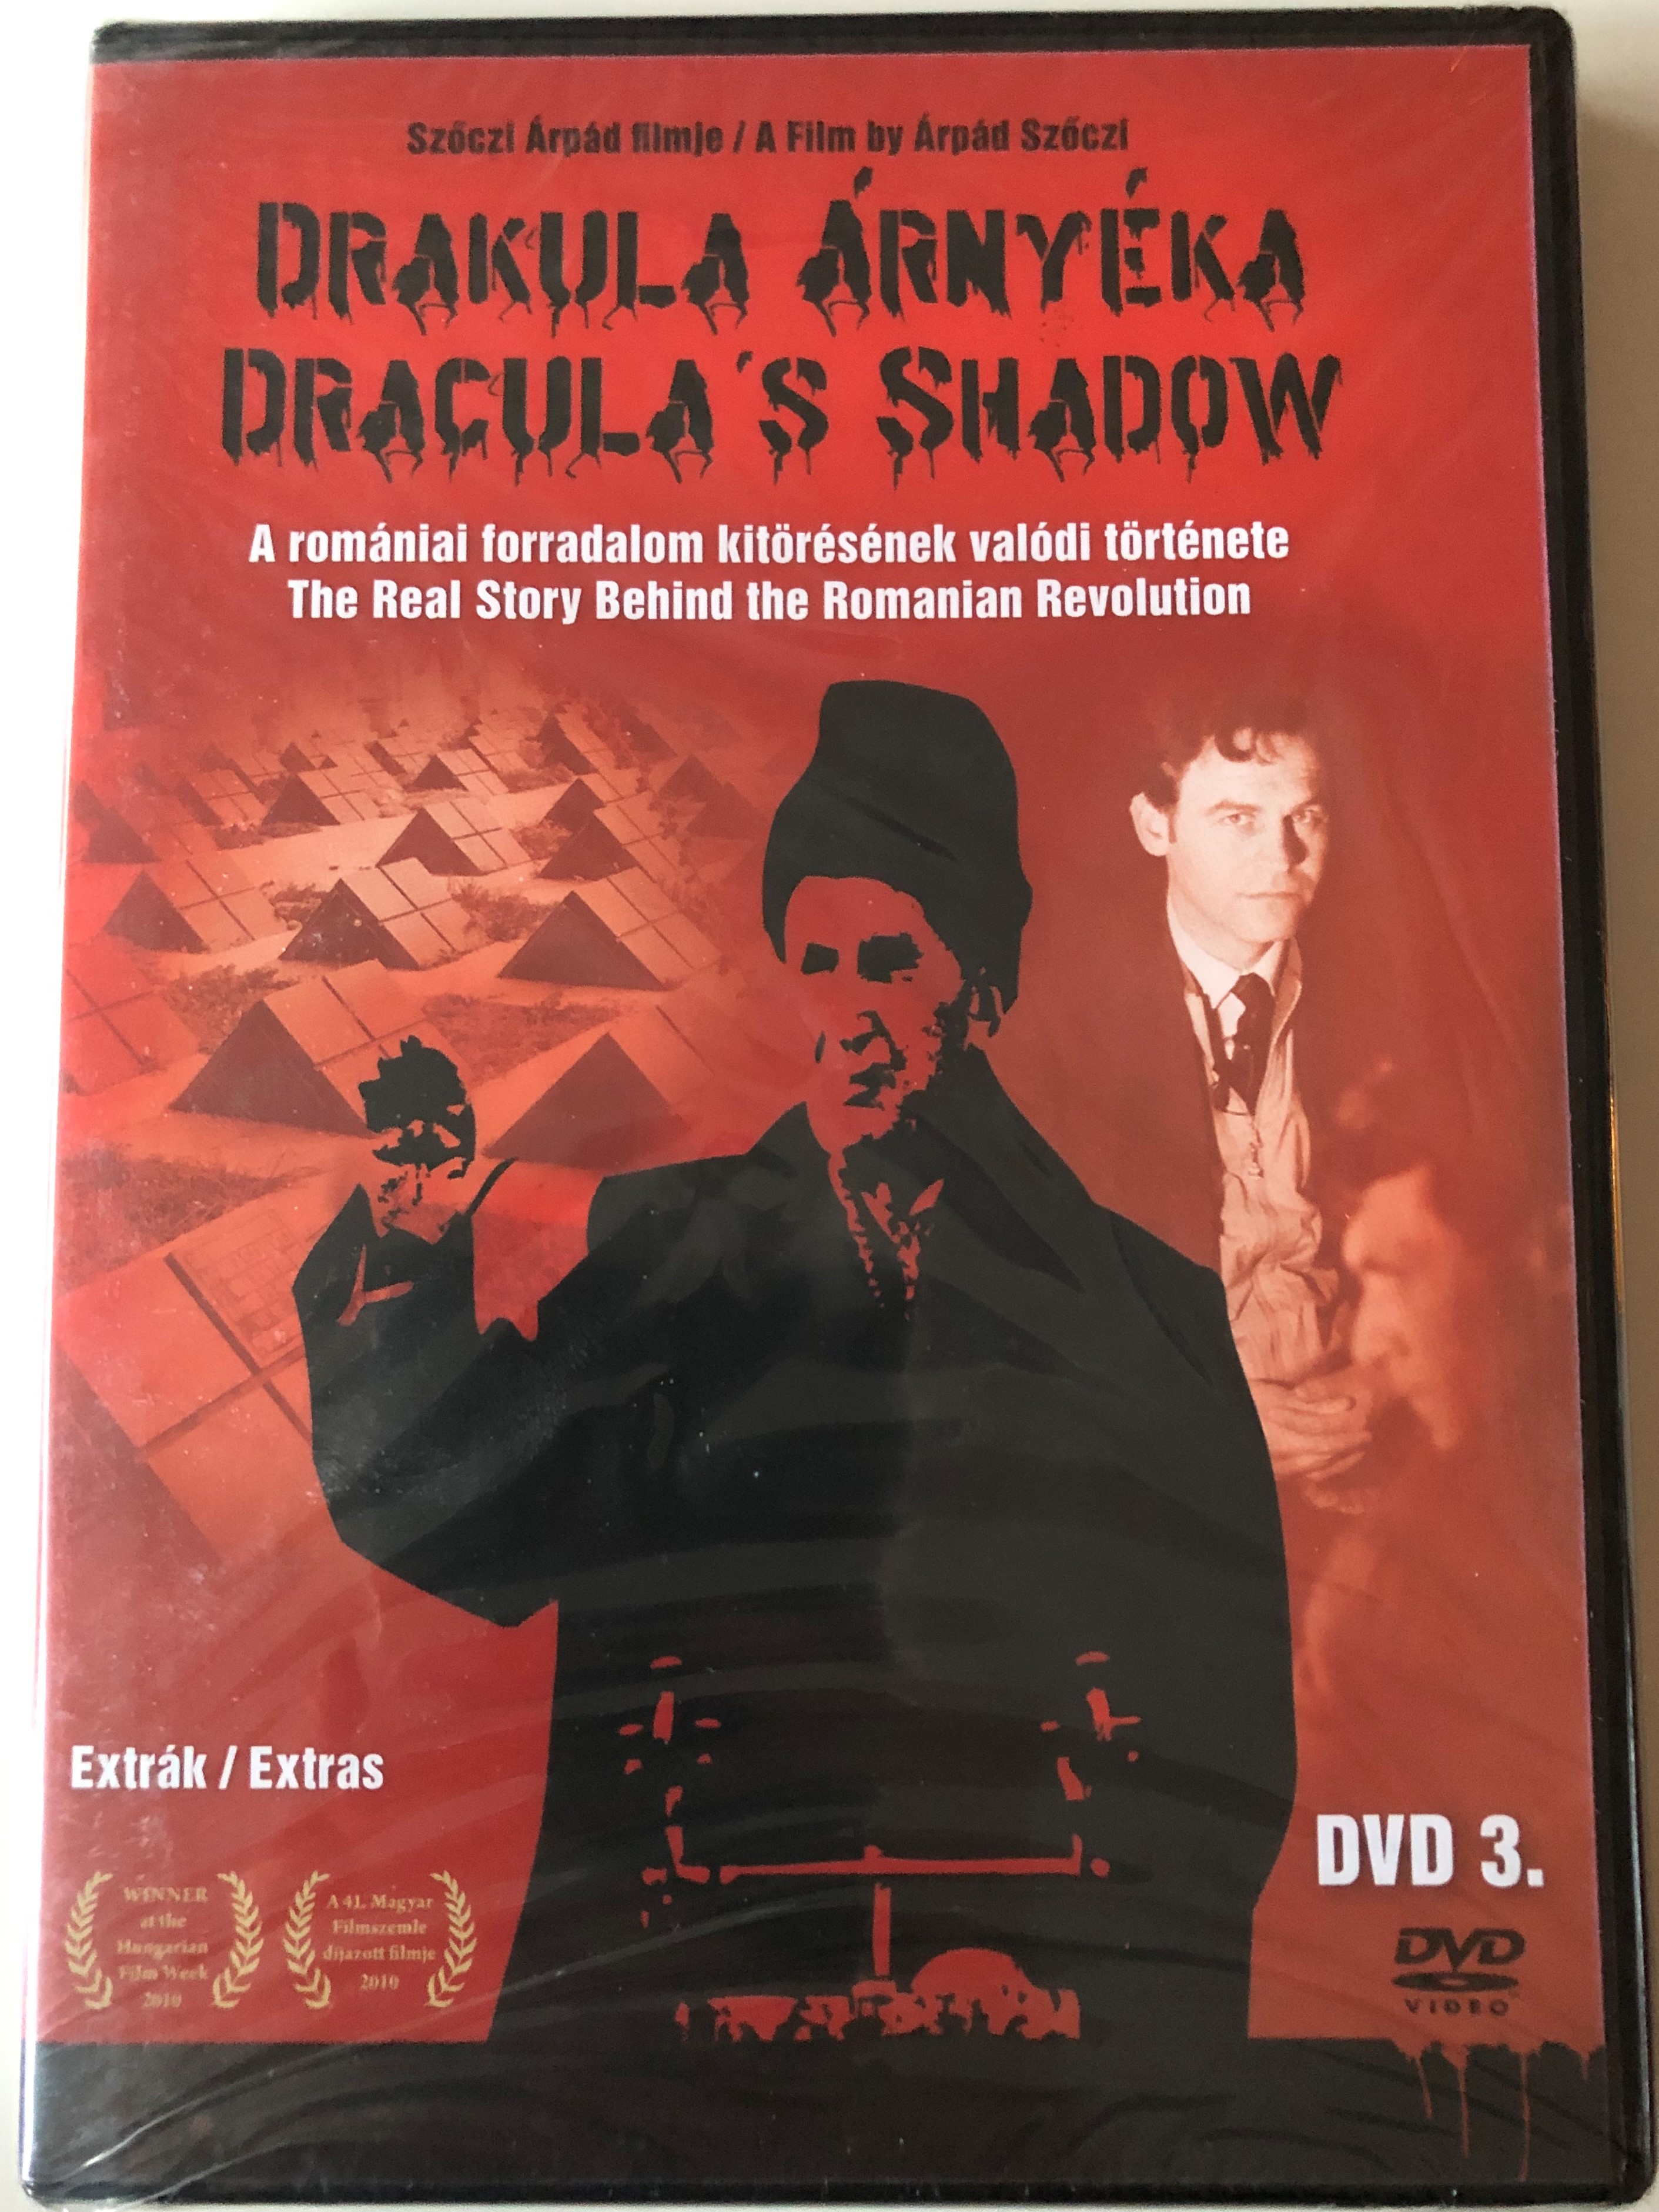 drakula-rny-ka-3.-extr-k-dvd-2009-the-shadow-of-dracula-disk-3-extras-1.jpg